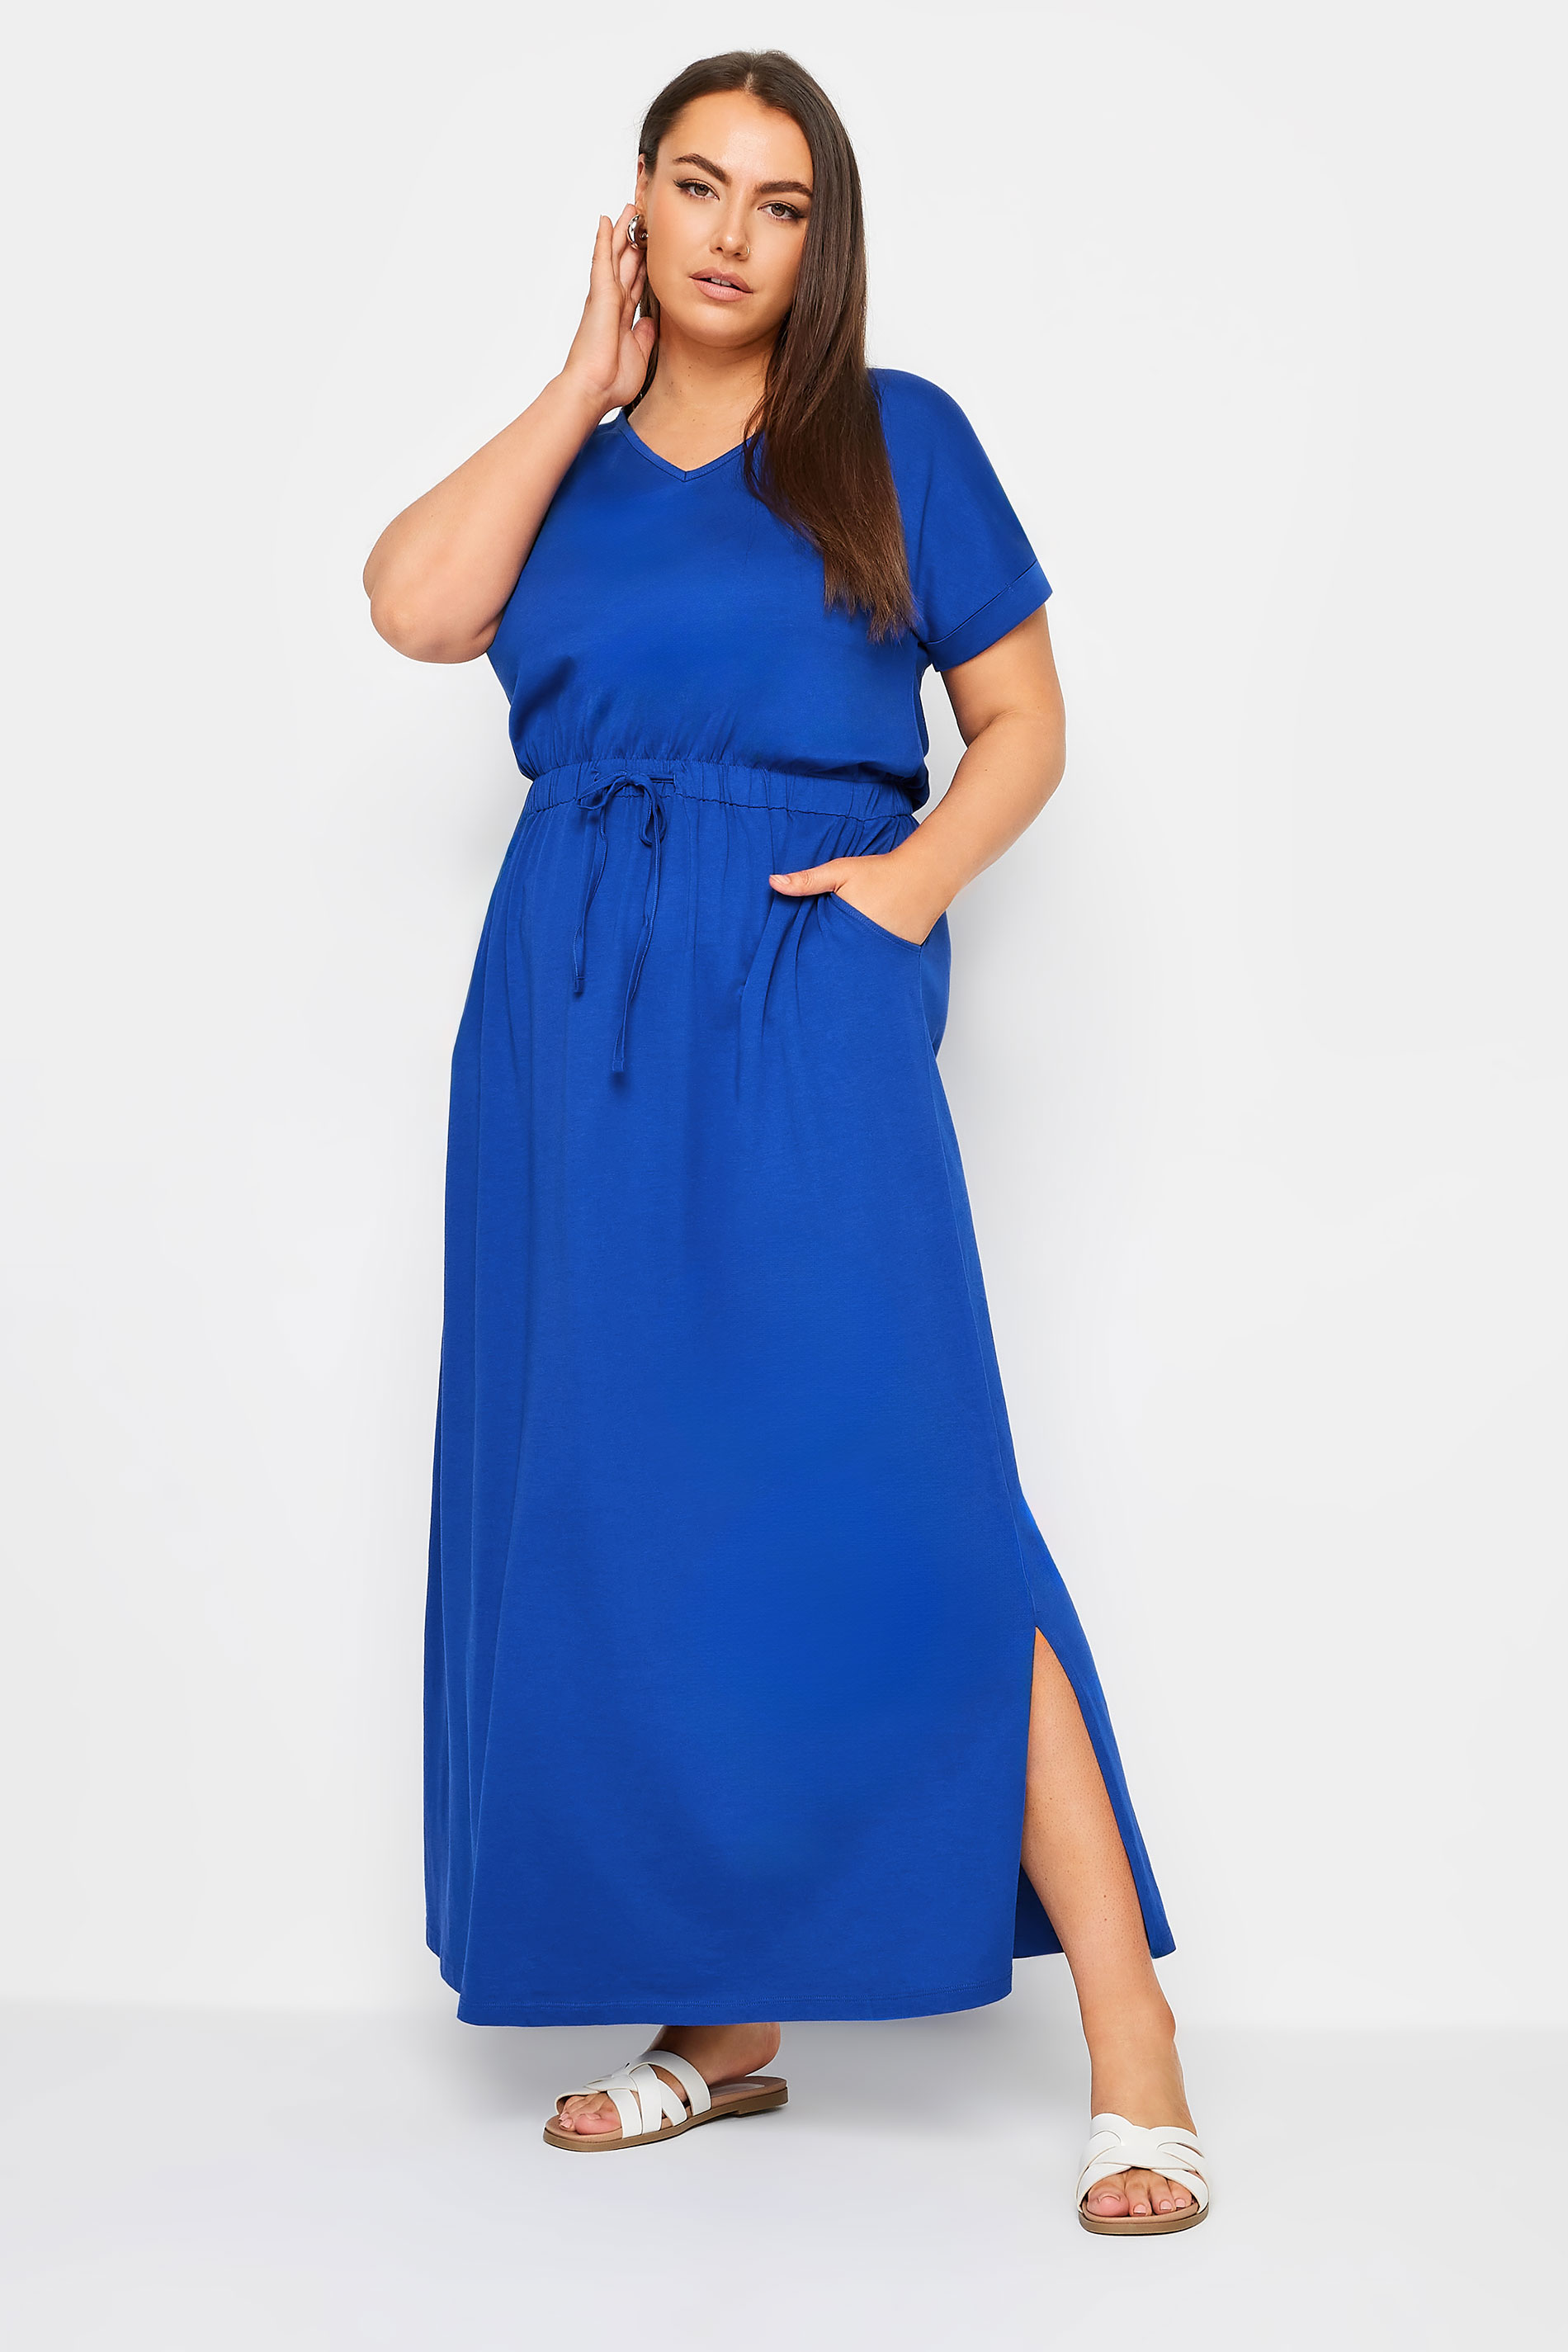 YOURS Plus Size Cobalt Blue Tie Detail Maxi Dress | Yours Clothing 2